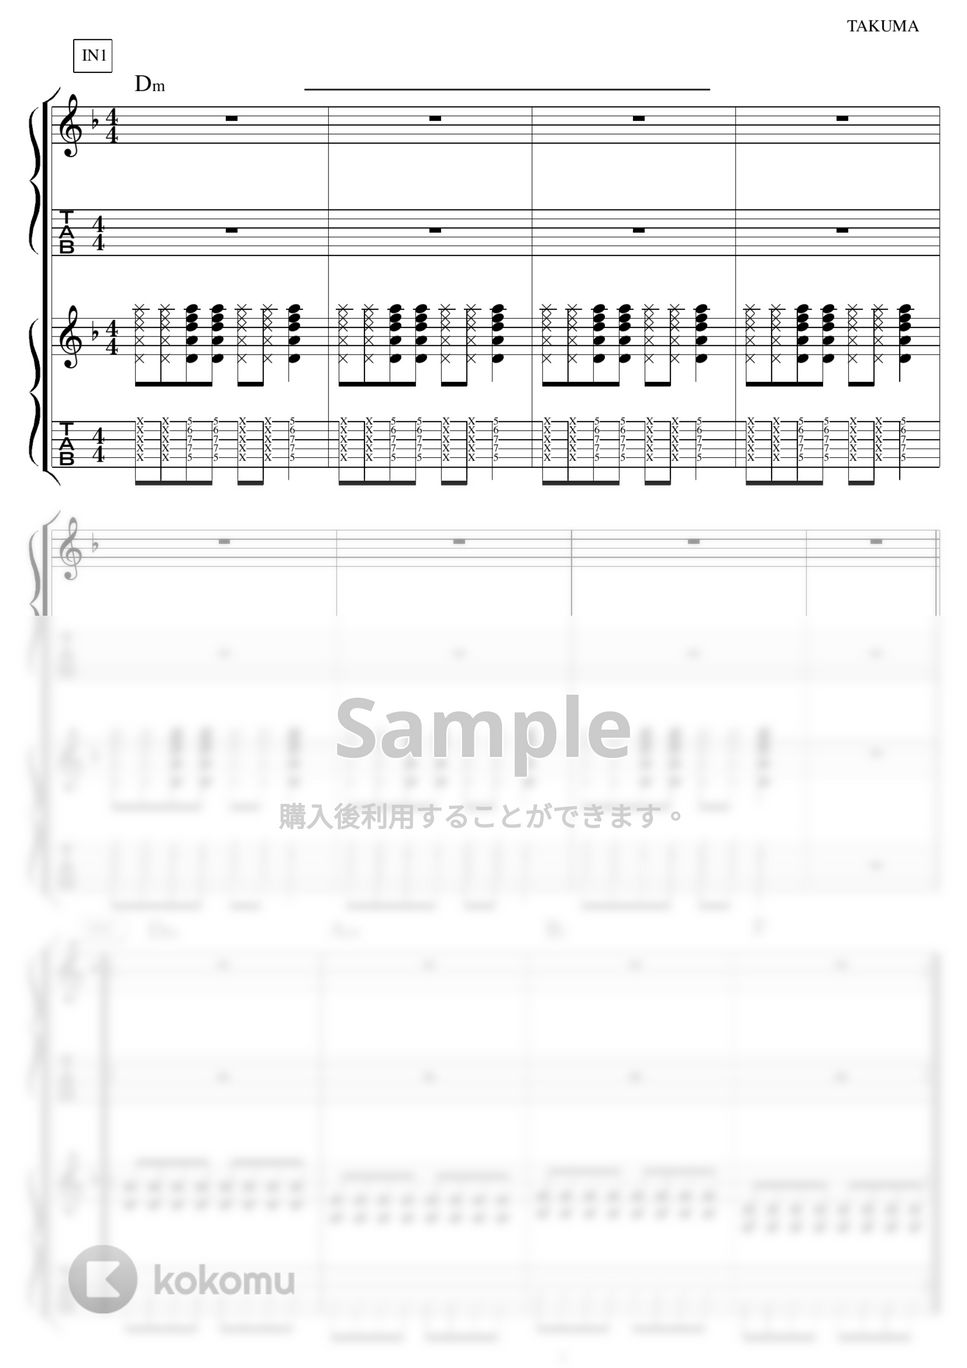 10-FEET - その向こうへ ギター演奏動画付TAB譜 by バイトーン音楽教室